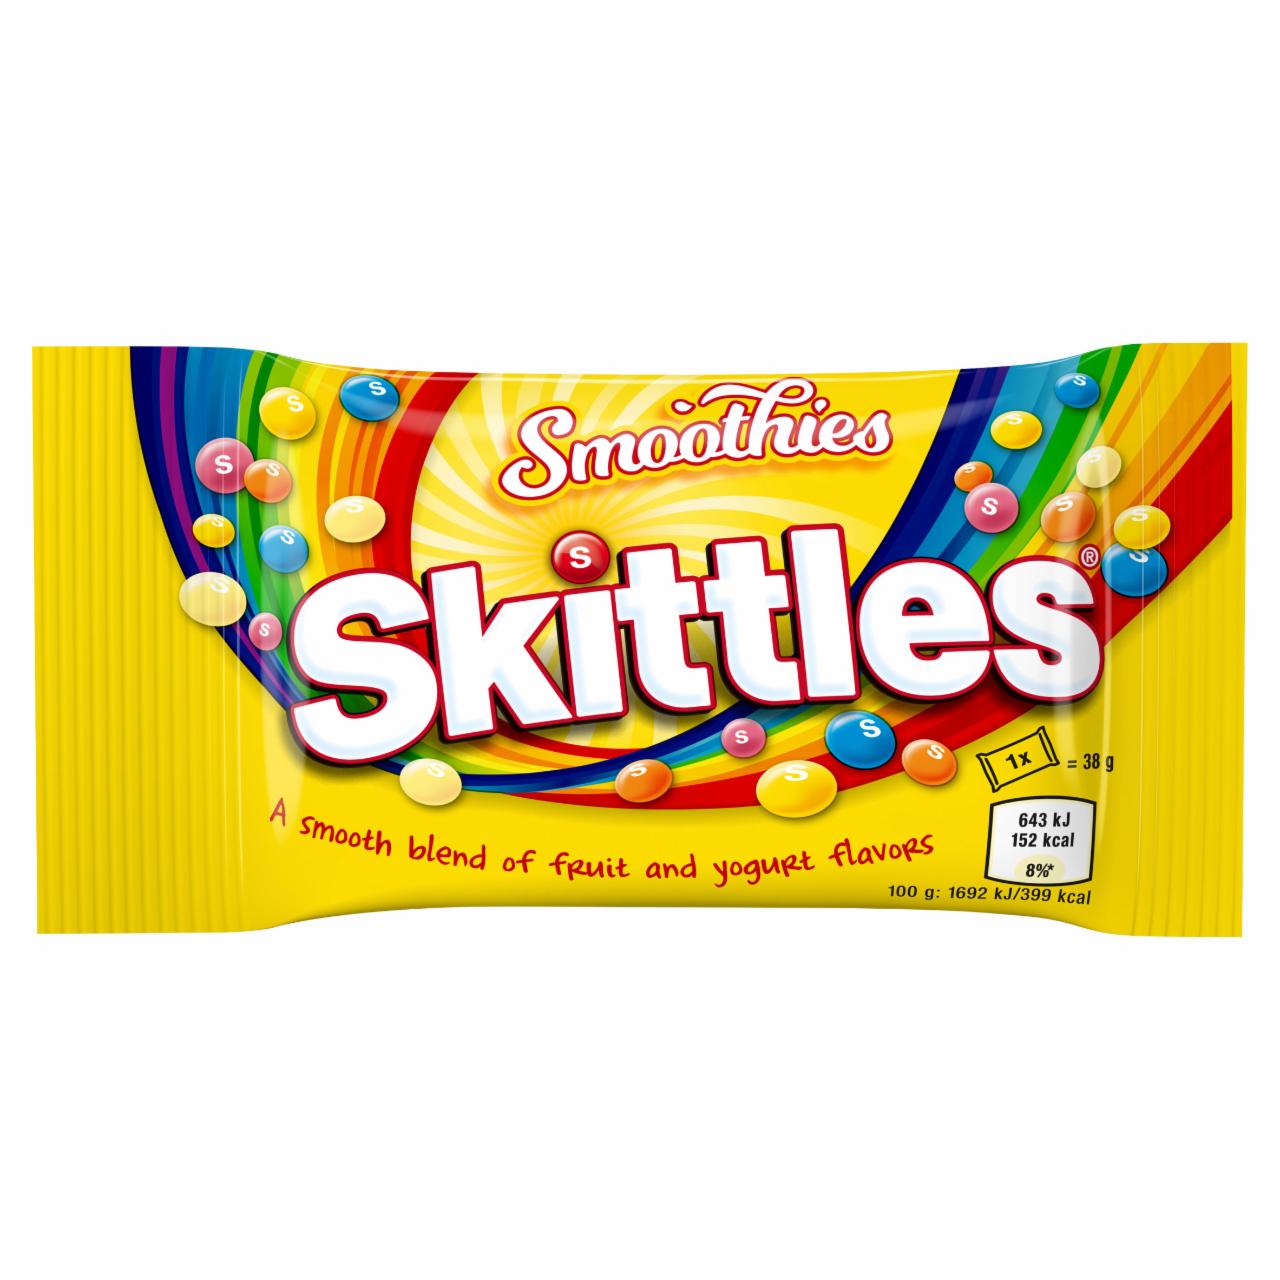 Zdjęcia - Skittles Smoothies Cukierki do żucia 38 g